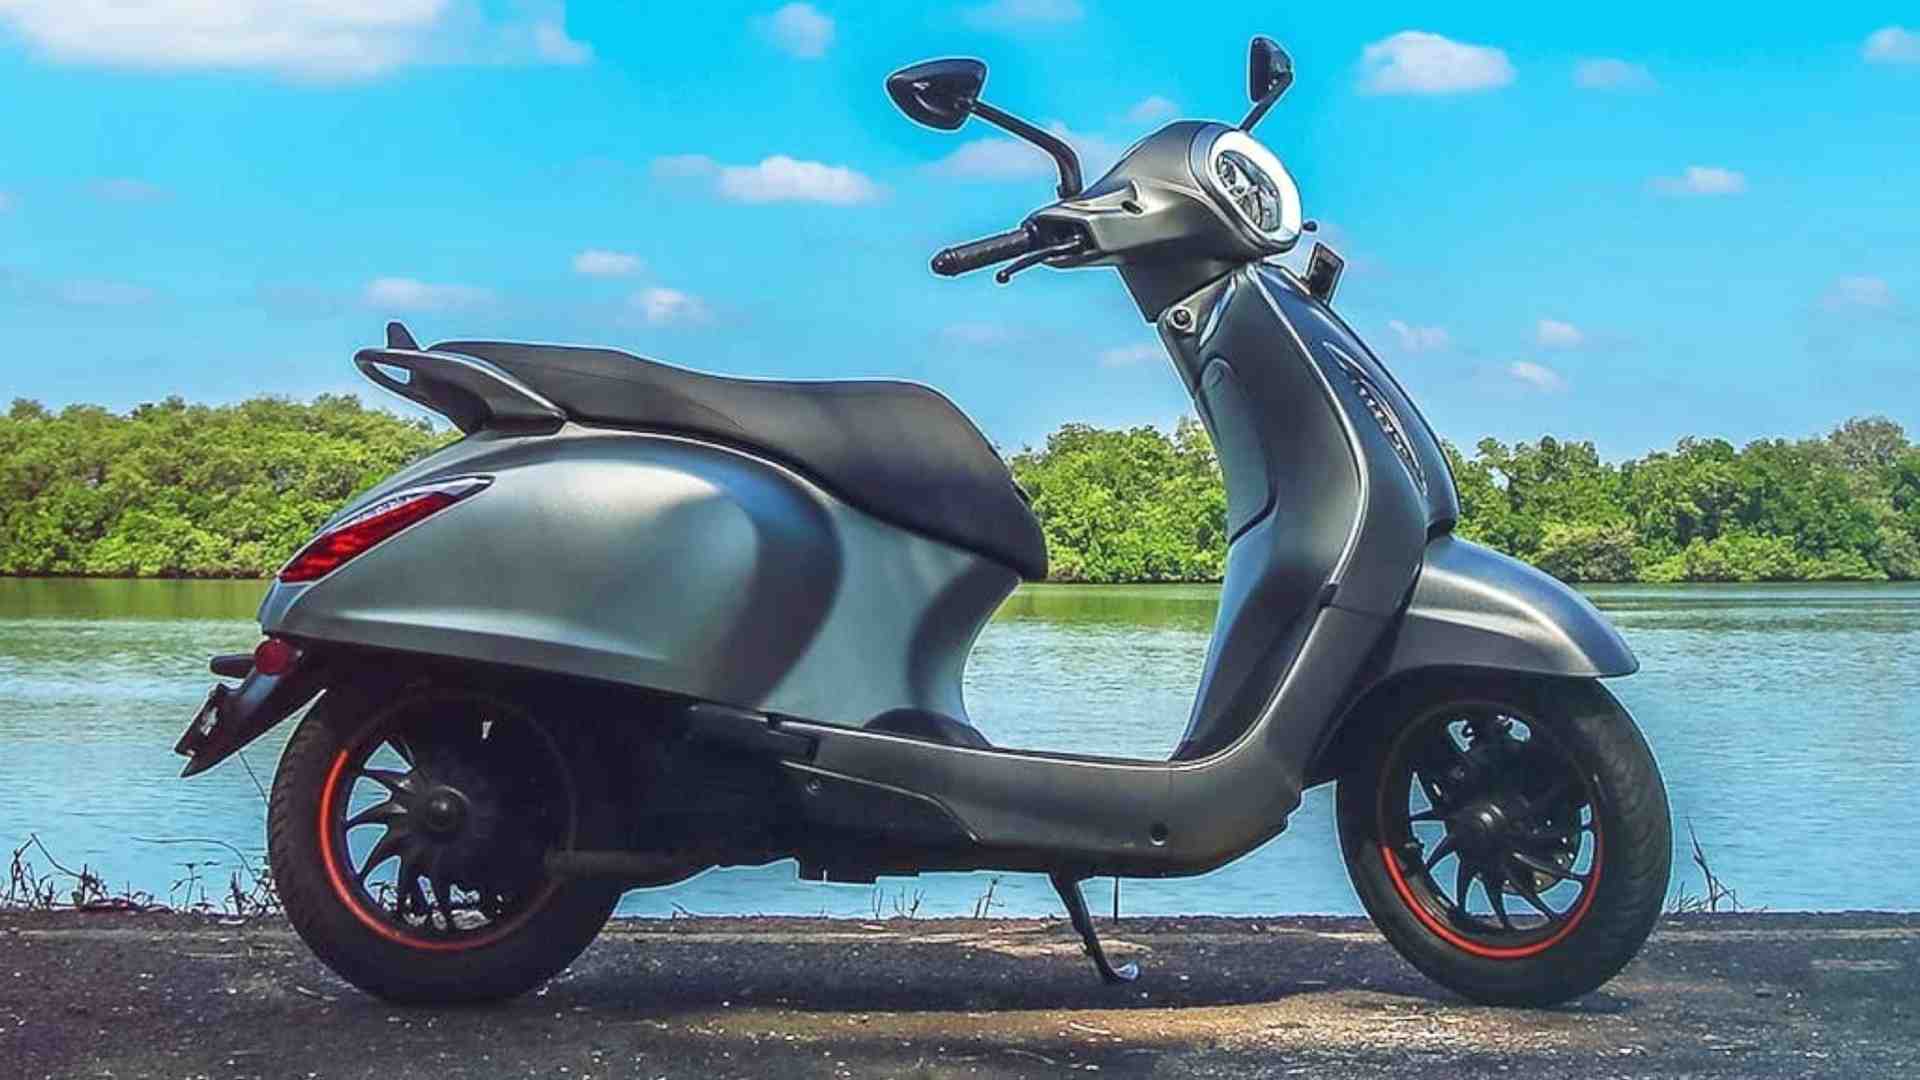 Bajaj Chetak Electric Scooter